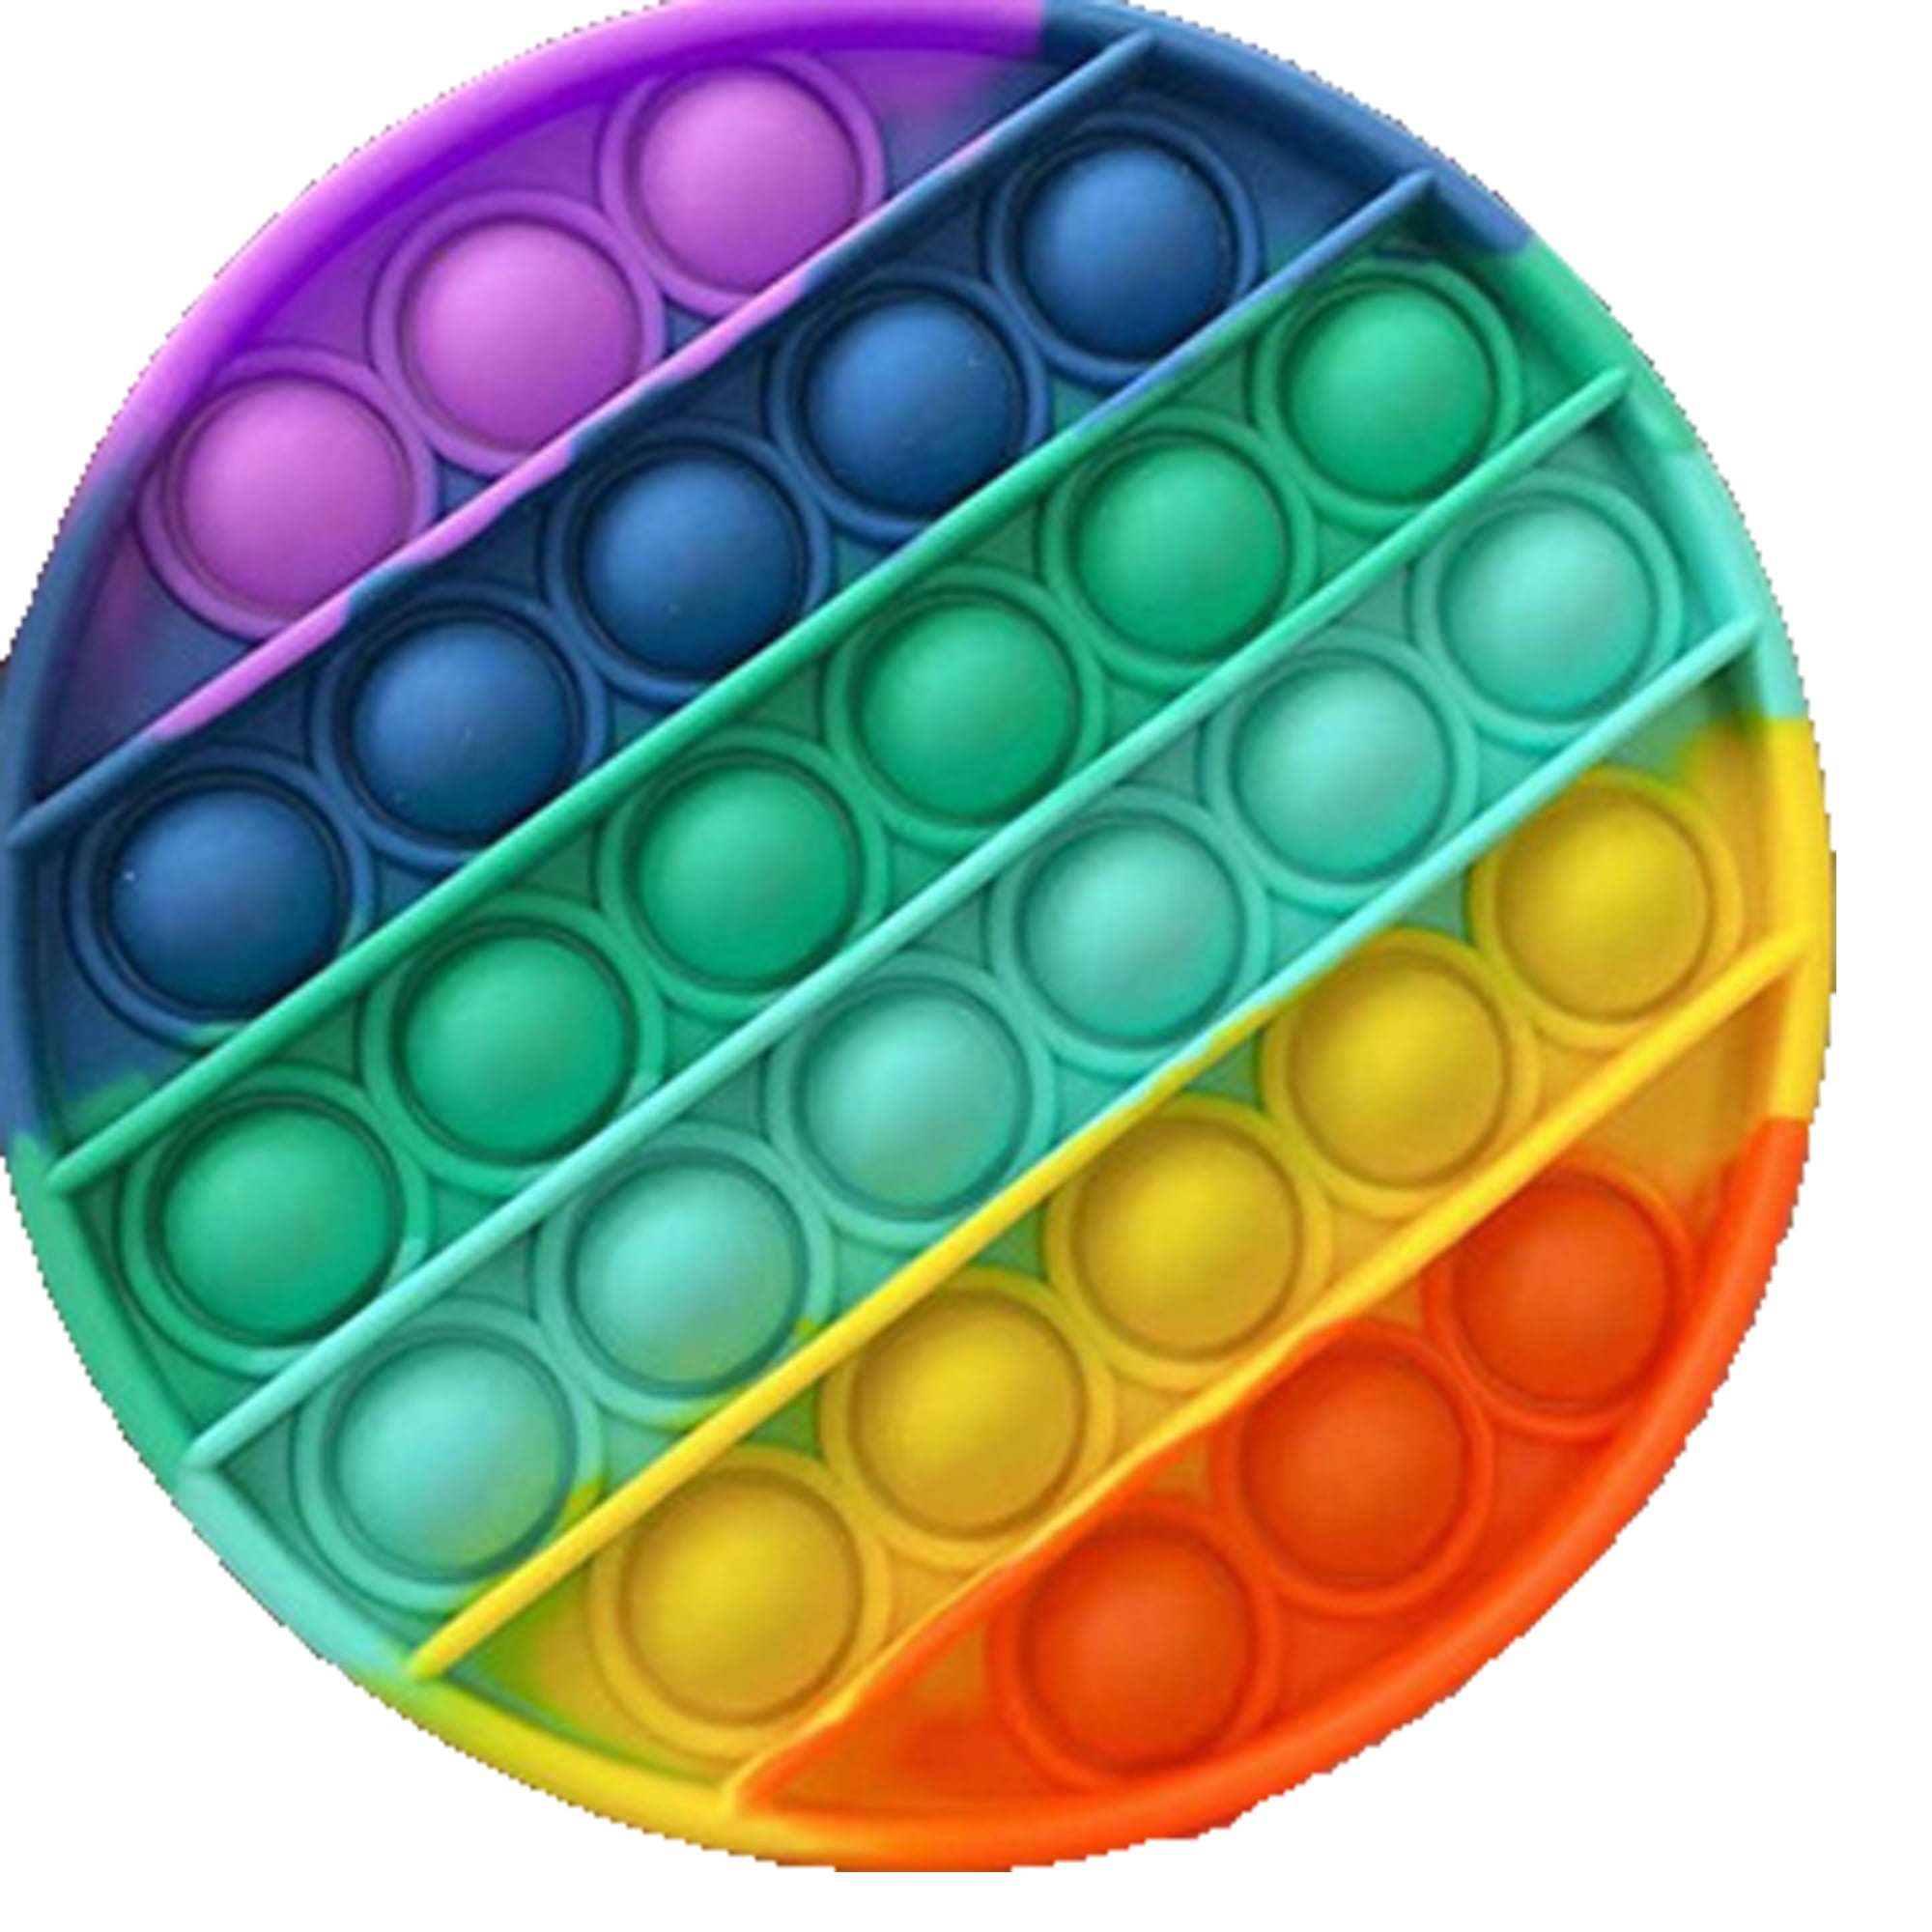 Details about   Push Pop Silicone Sensory Fidget Toy Pop Bubble Office Stress Relief Rainbow USA 